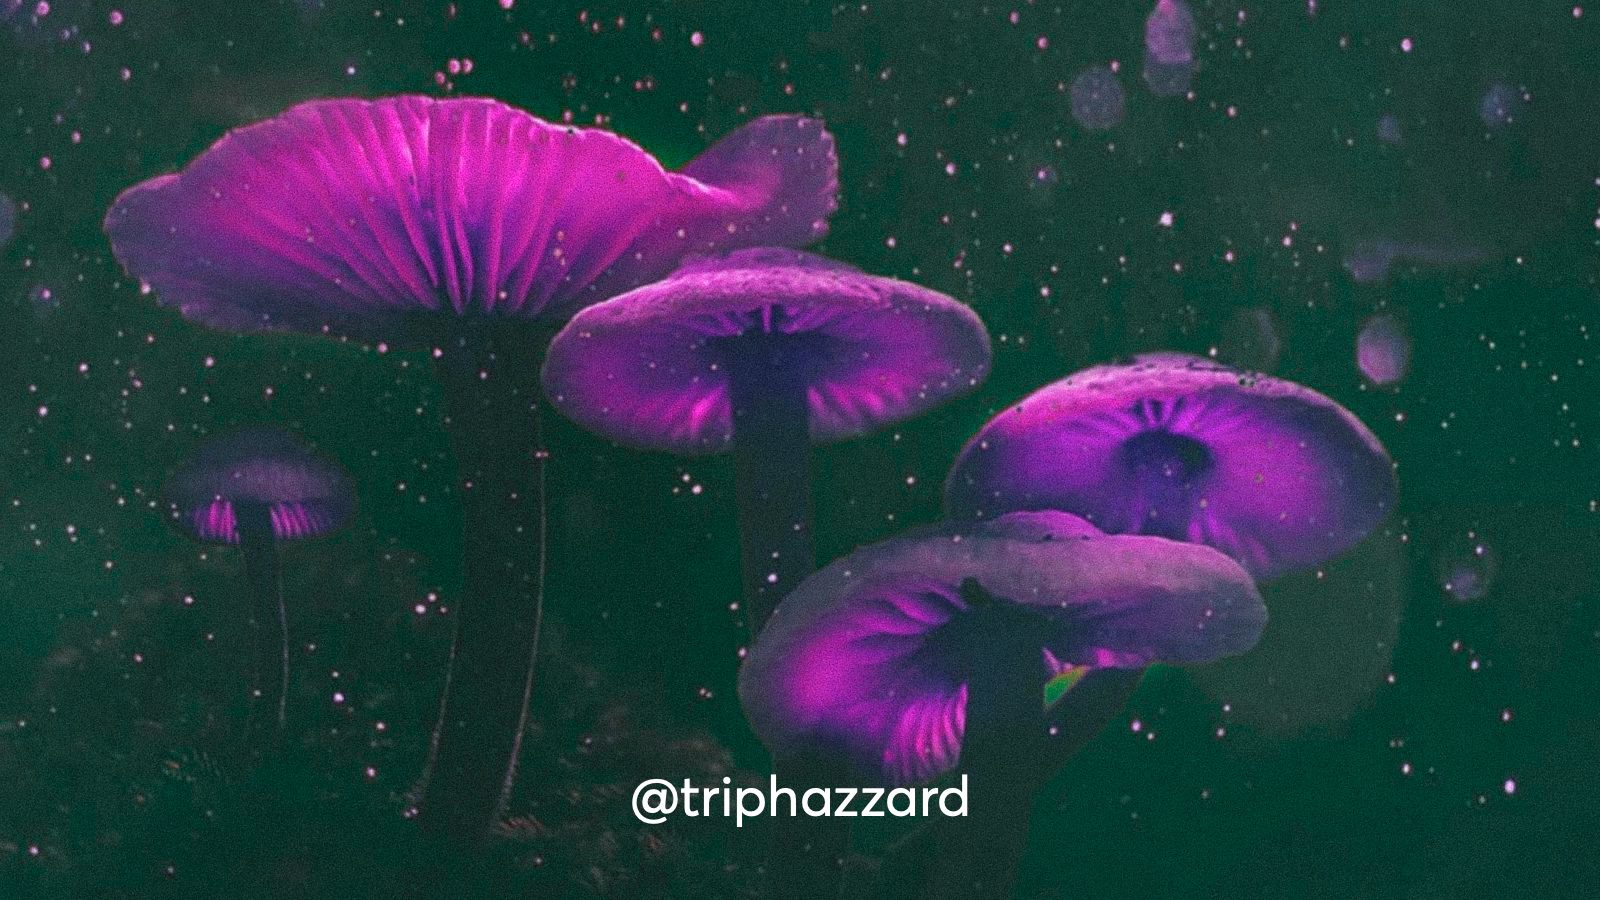 A piece of digital art depicting purple magic mushrooms in a starry sky.